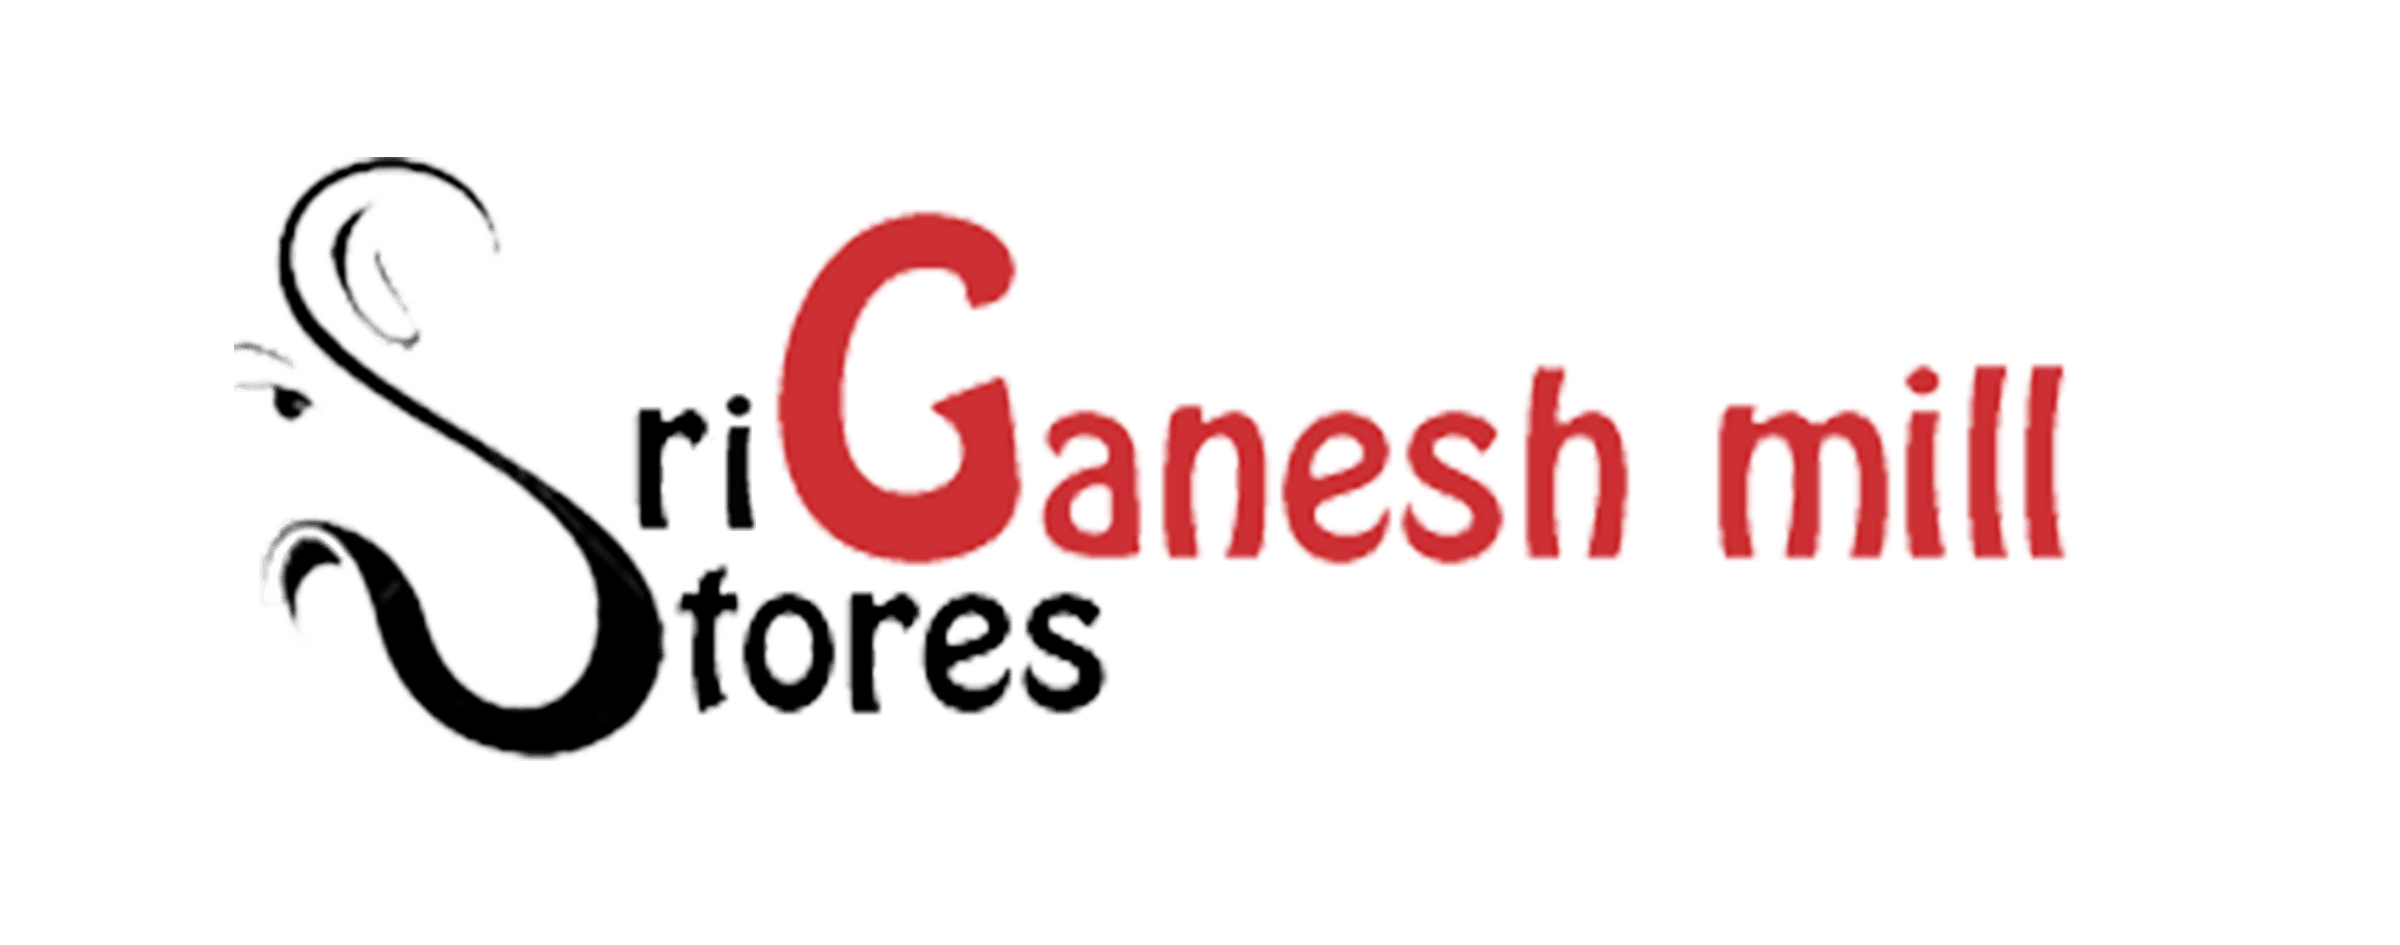 Sri Ganesh Mill Stores Logo